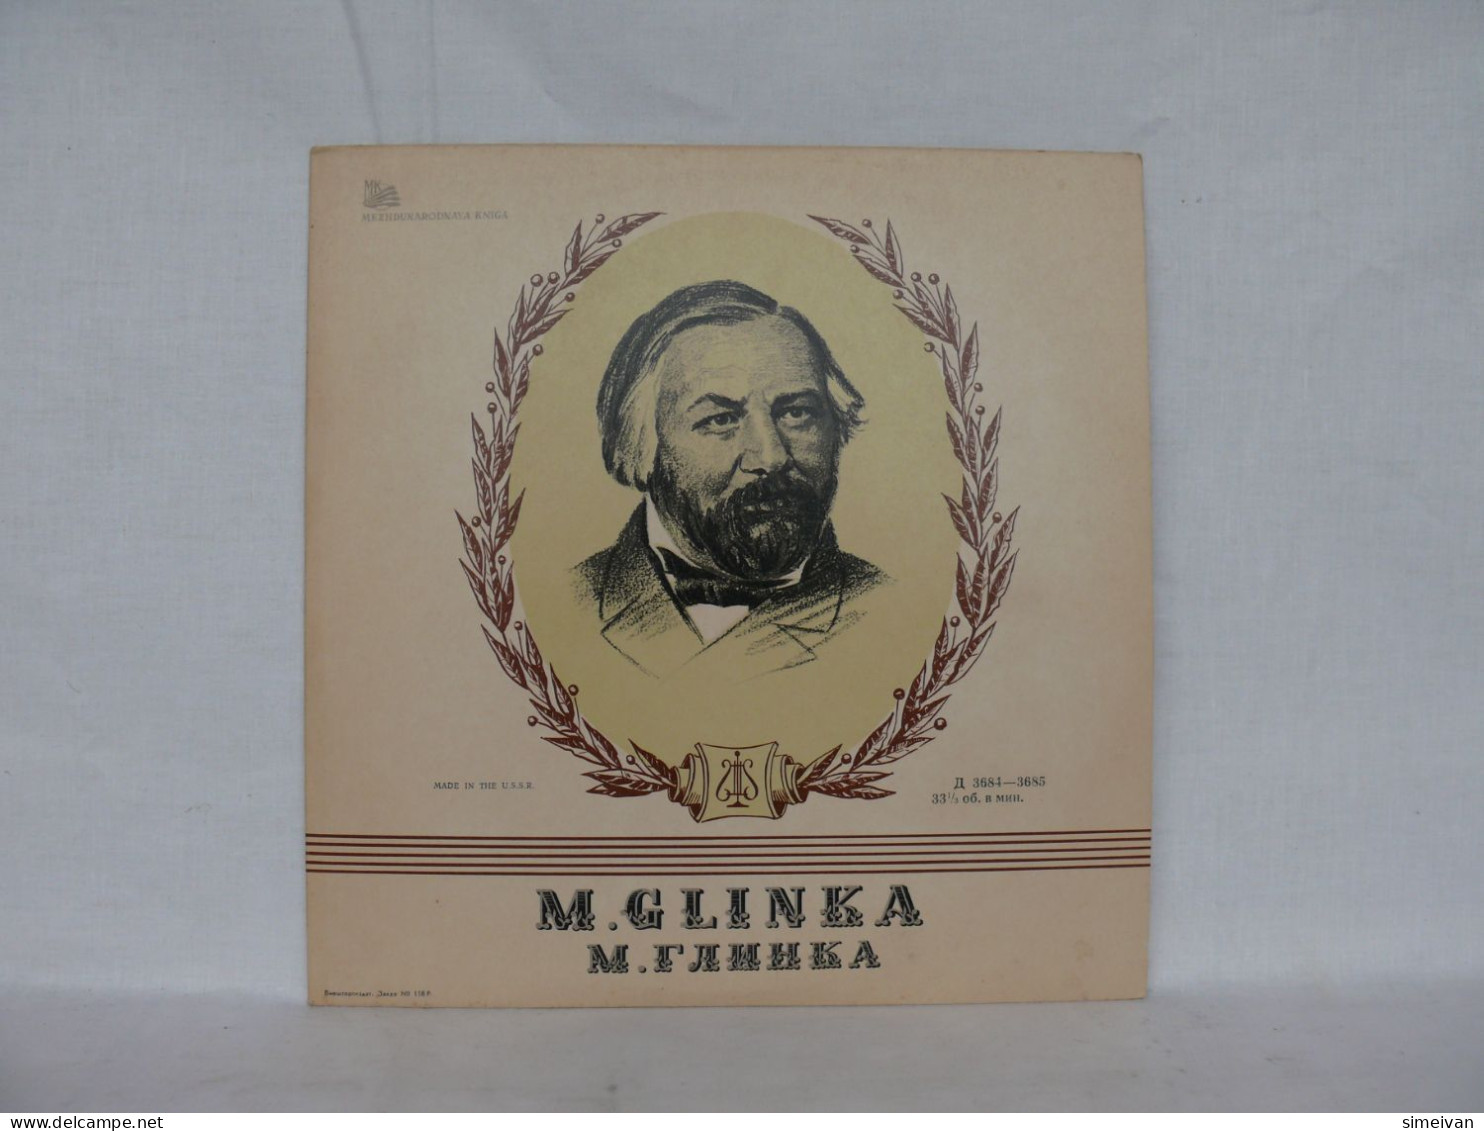 M. GLINKA "RUSLAND AND LUDMILA" "IVAN SUSANIN" VINYL MADE IN USSR D3684-5 #1680 - Opéra & Opérette